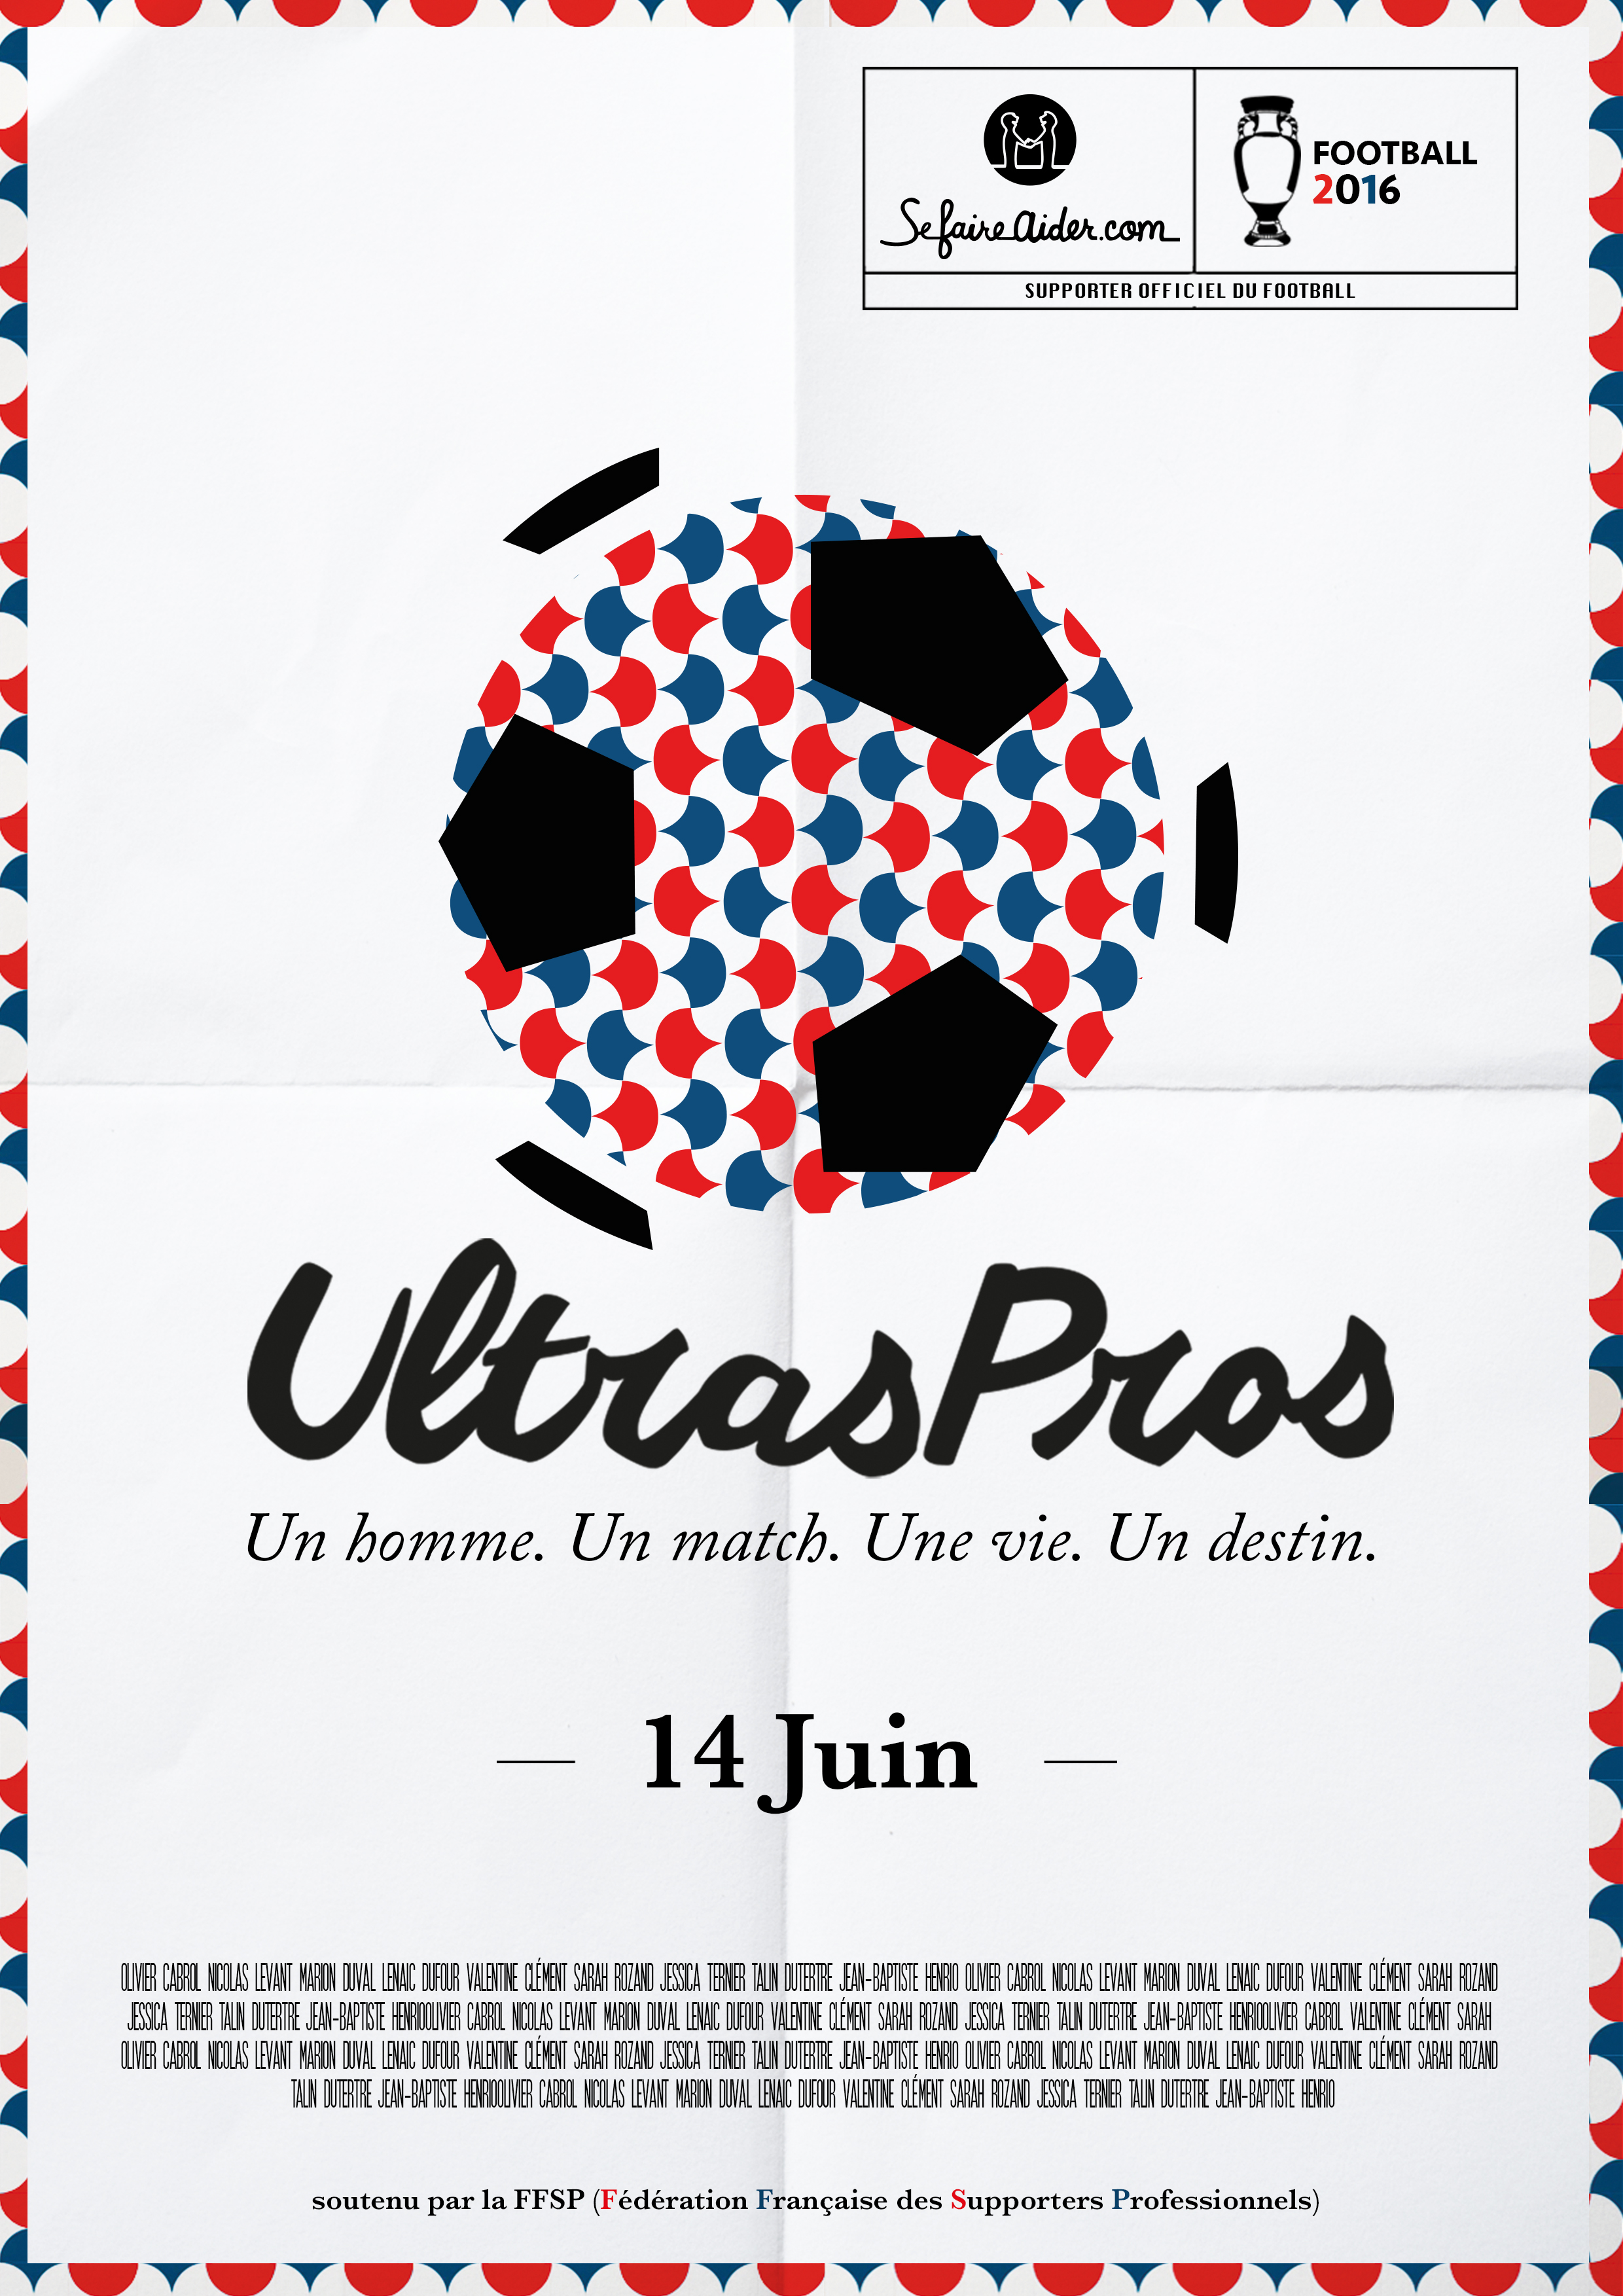 supporter professionnel ultrasPros sefaireaider.com football